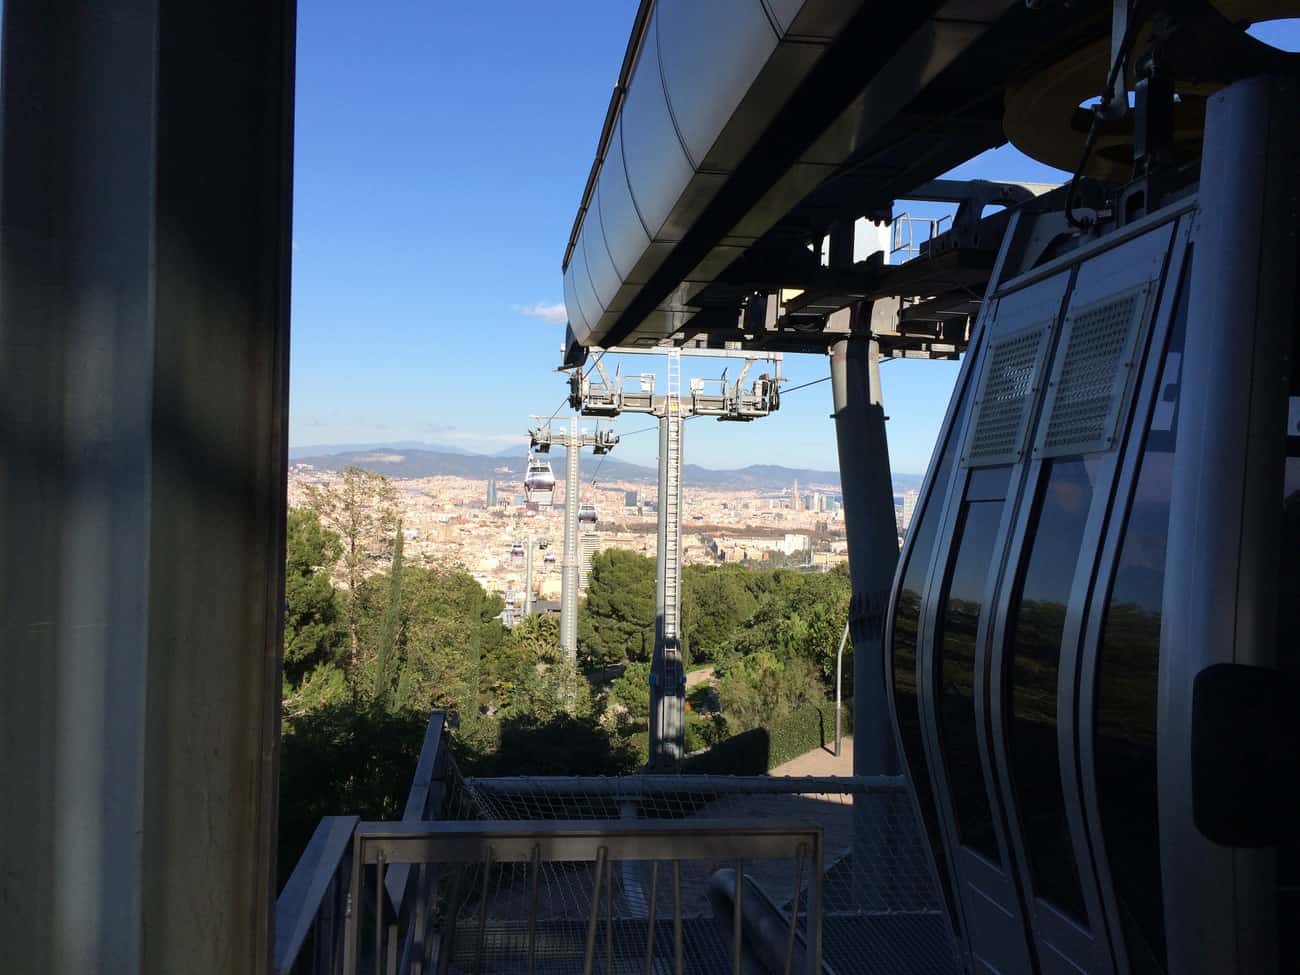 Barcelona - Teleferic de Montjuic cable car views